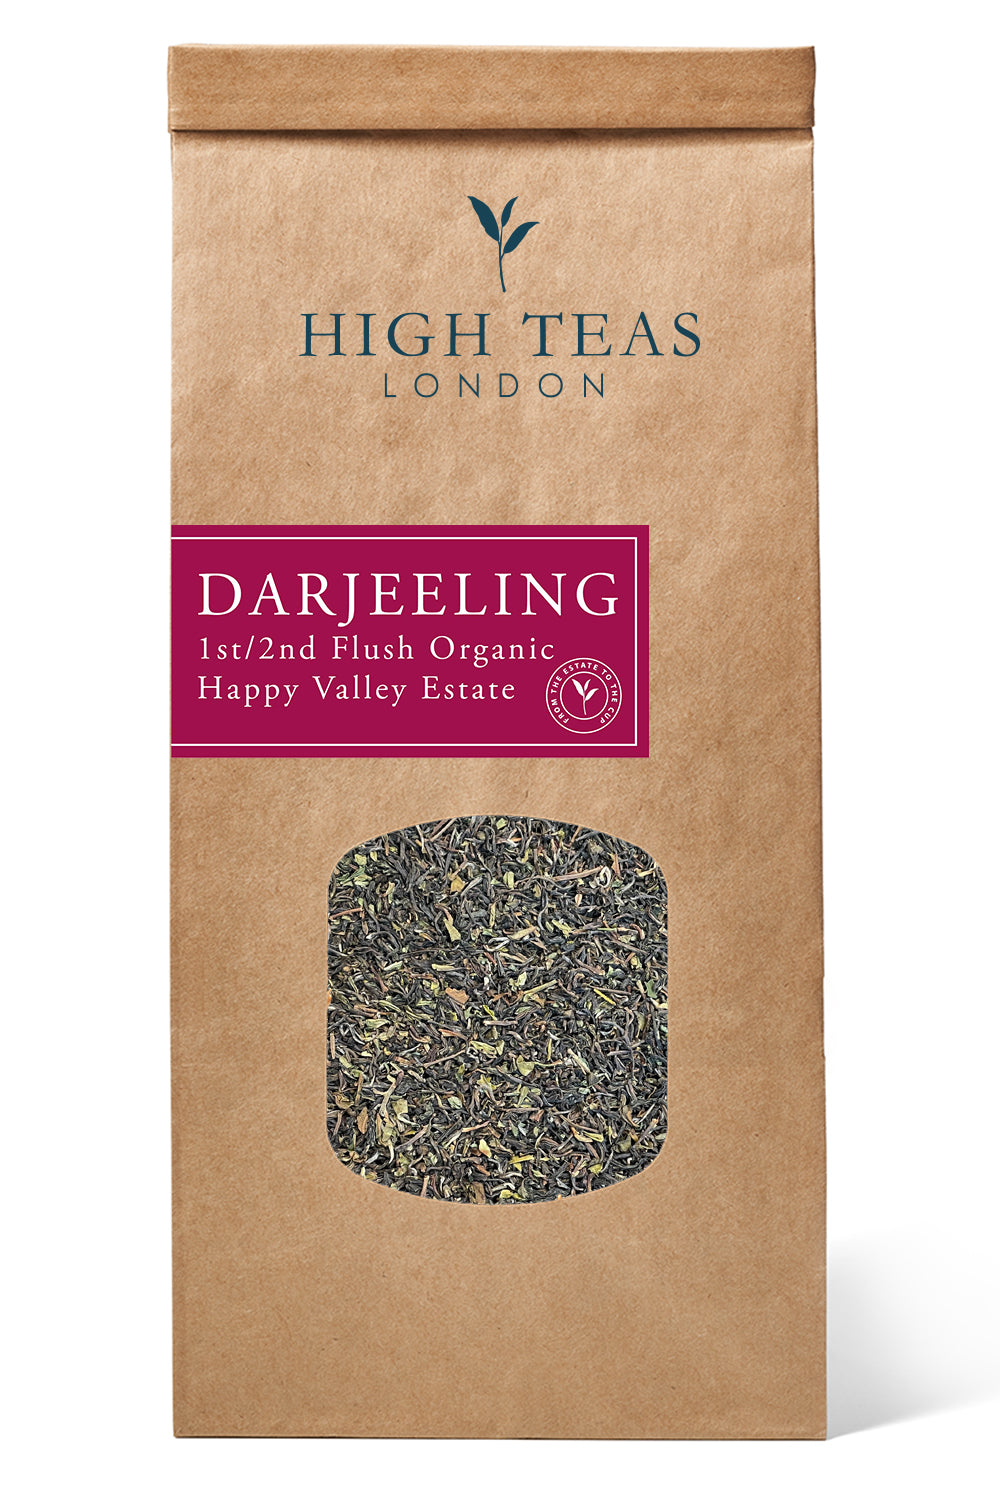 Darjeeling - 1st/2nd Flush Blend Organic FTGFOP1, Happy Valley Estate-250g-Loose Leaf Tea-High Teas